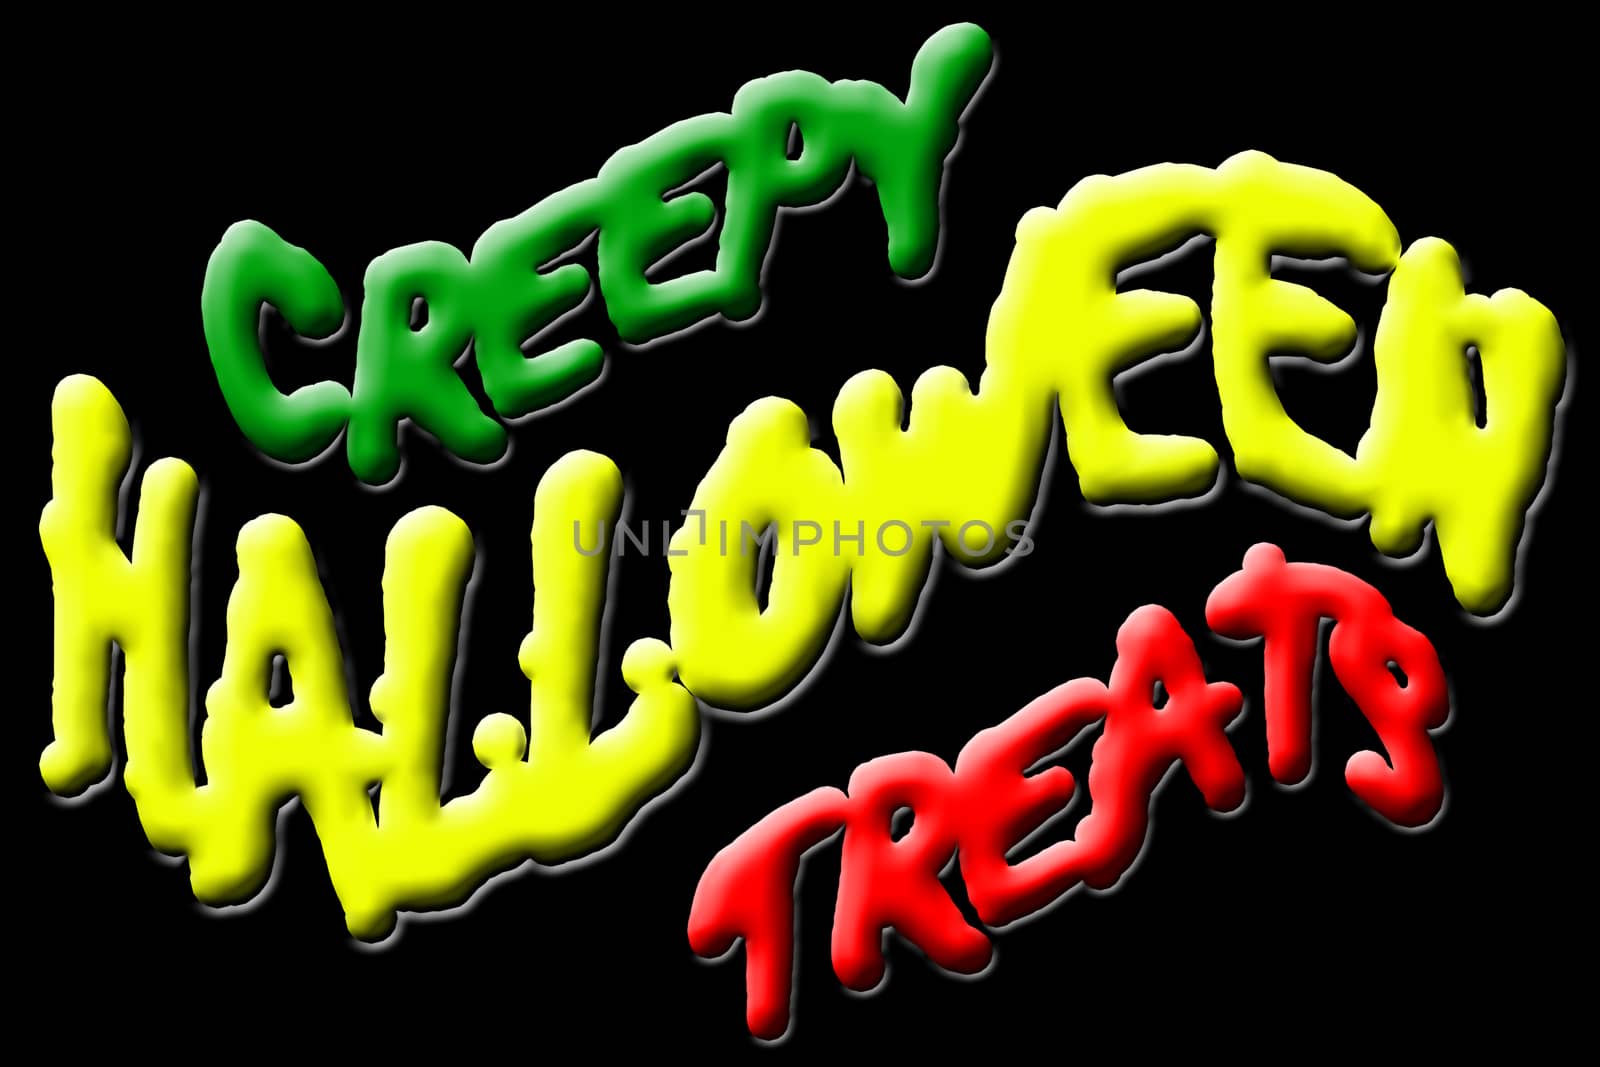 Illustration of creepy halloween treats title, isolated on black background.